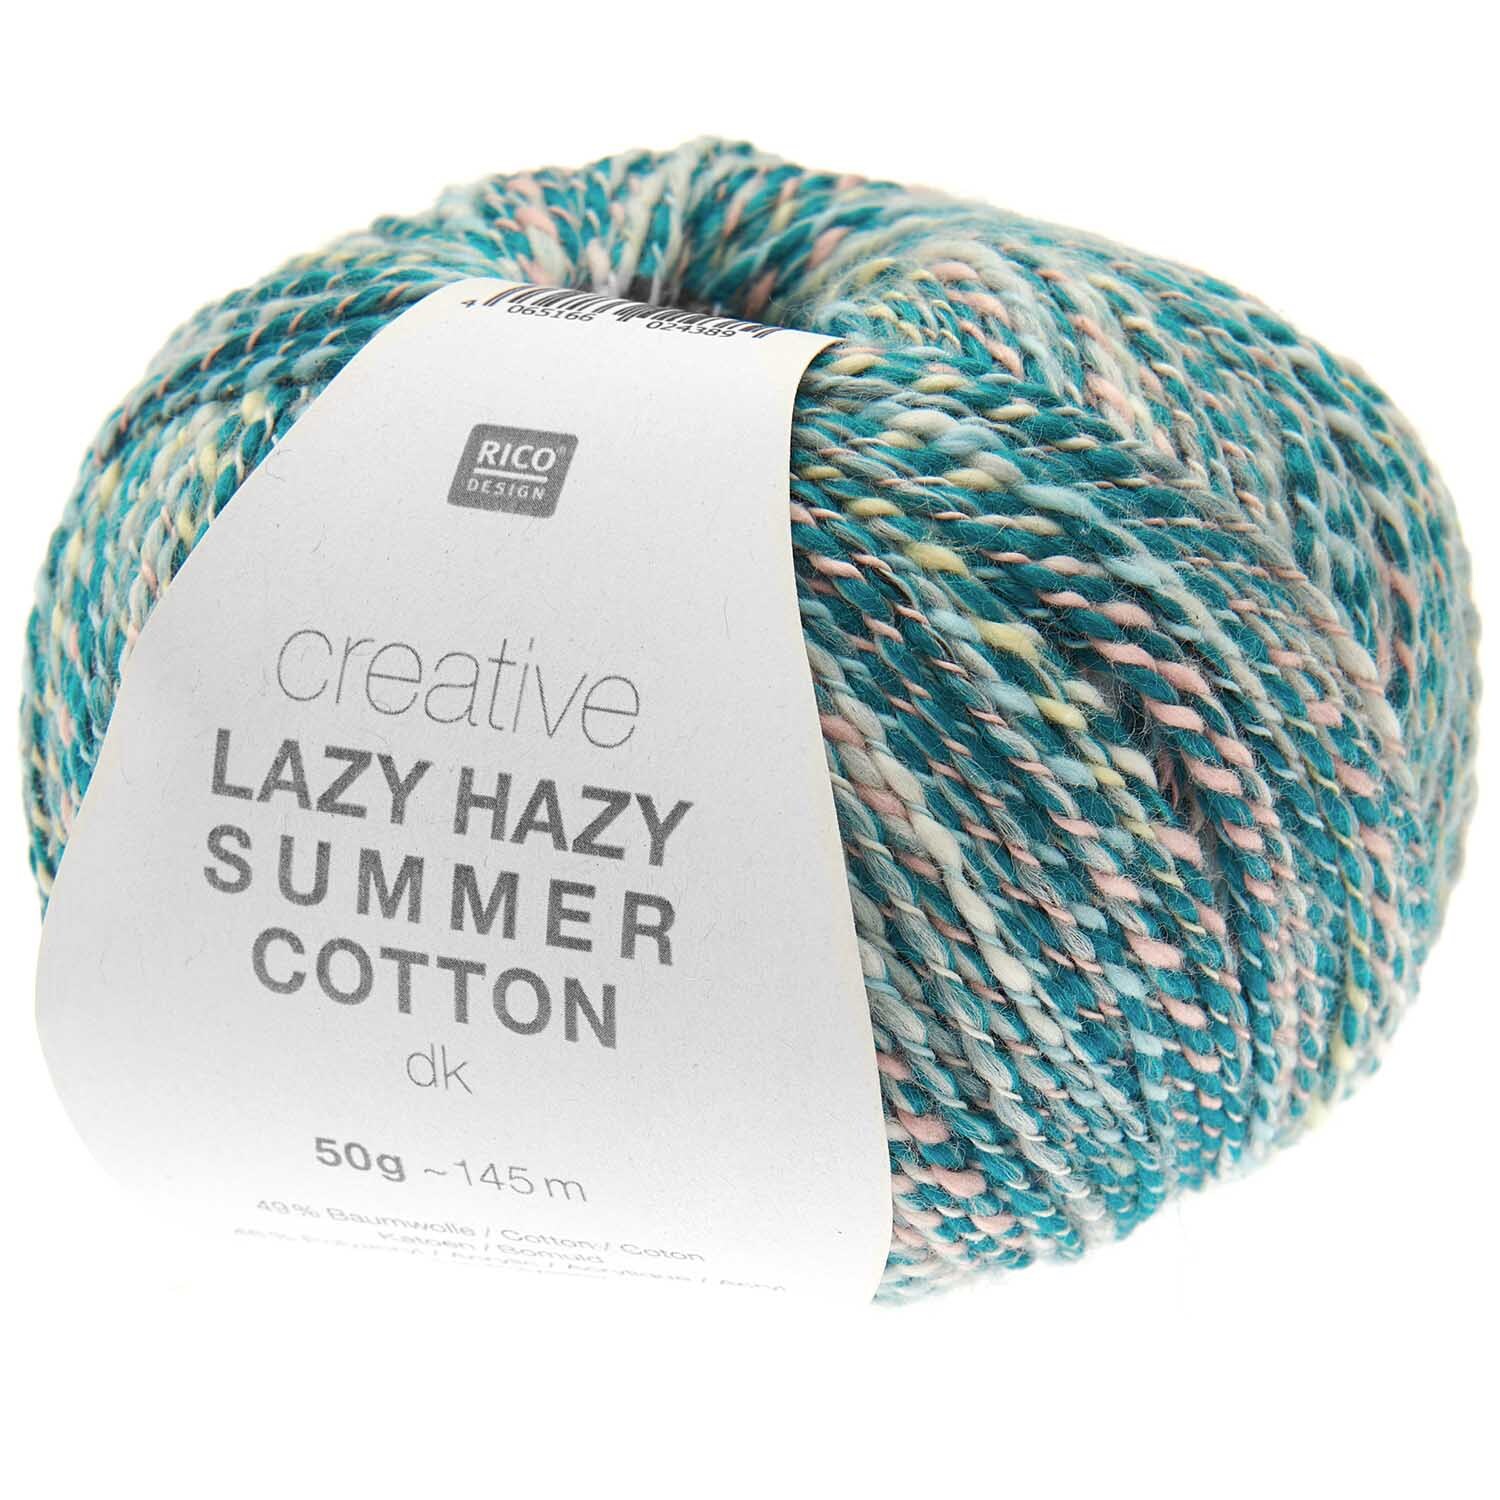 Creative Lazy Hazy Summer Cotton dk